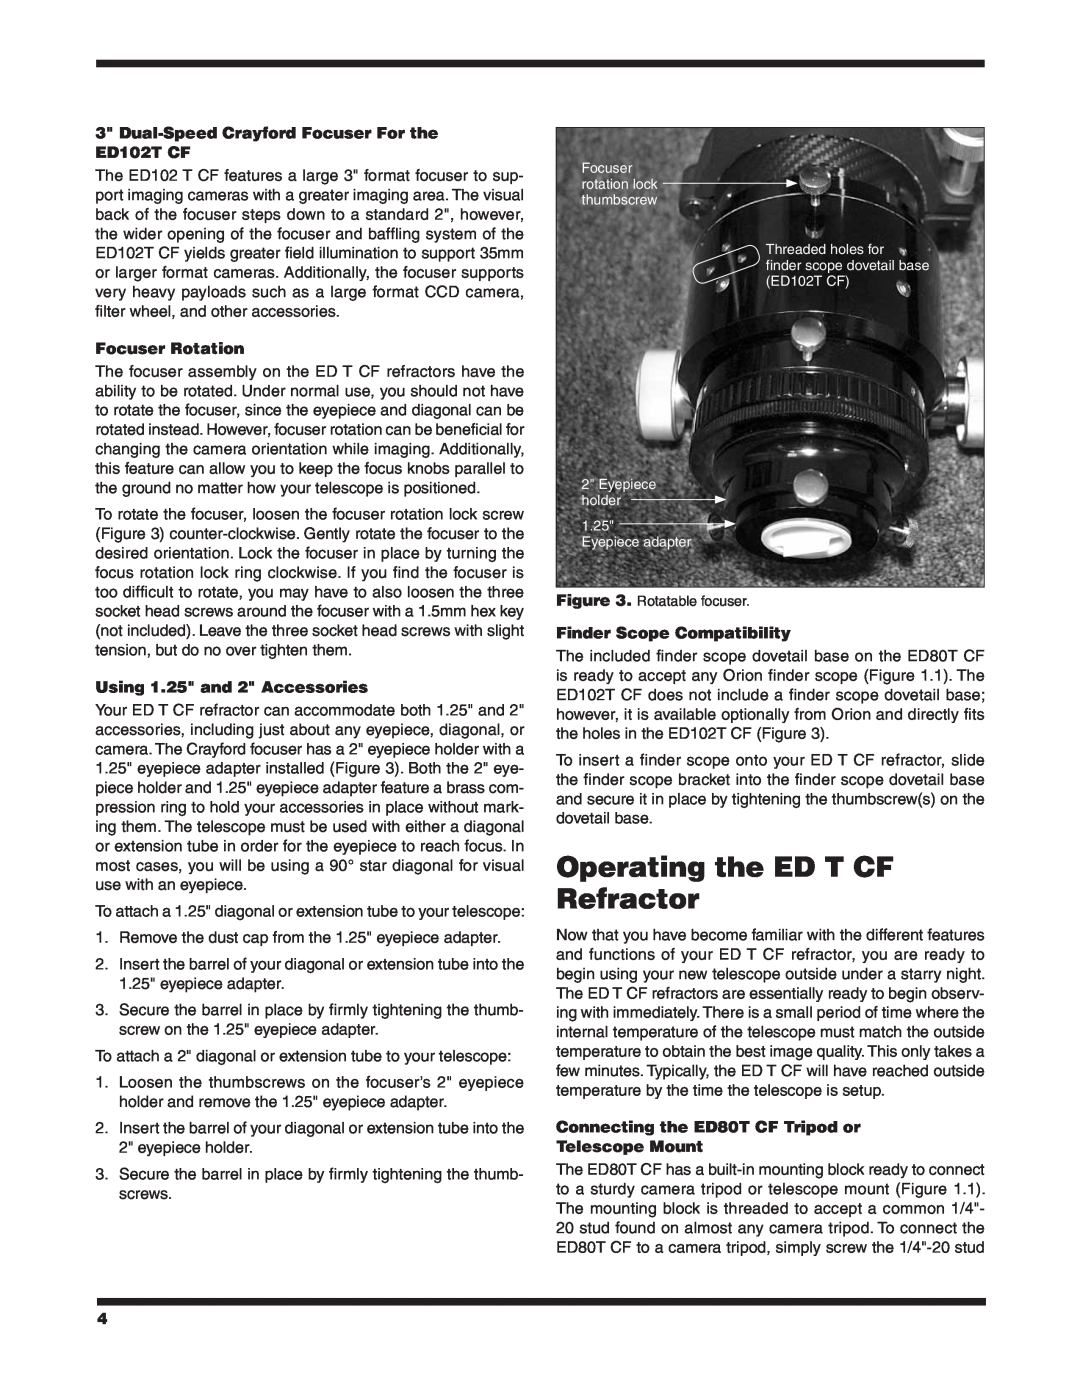 Orion ED80T CF #9534 Operating the ED T CF Refractor, Dual-SpeedCrayford Focuser For the ED102T CF, Focuser Rotation 